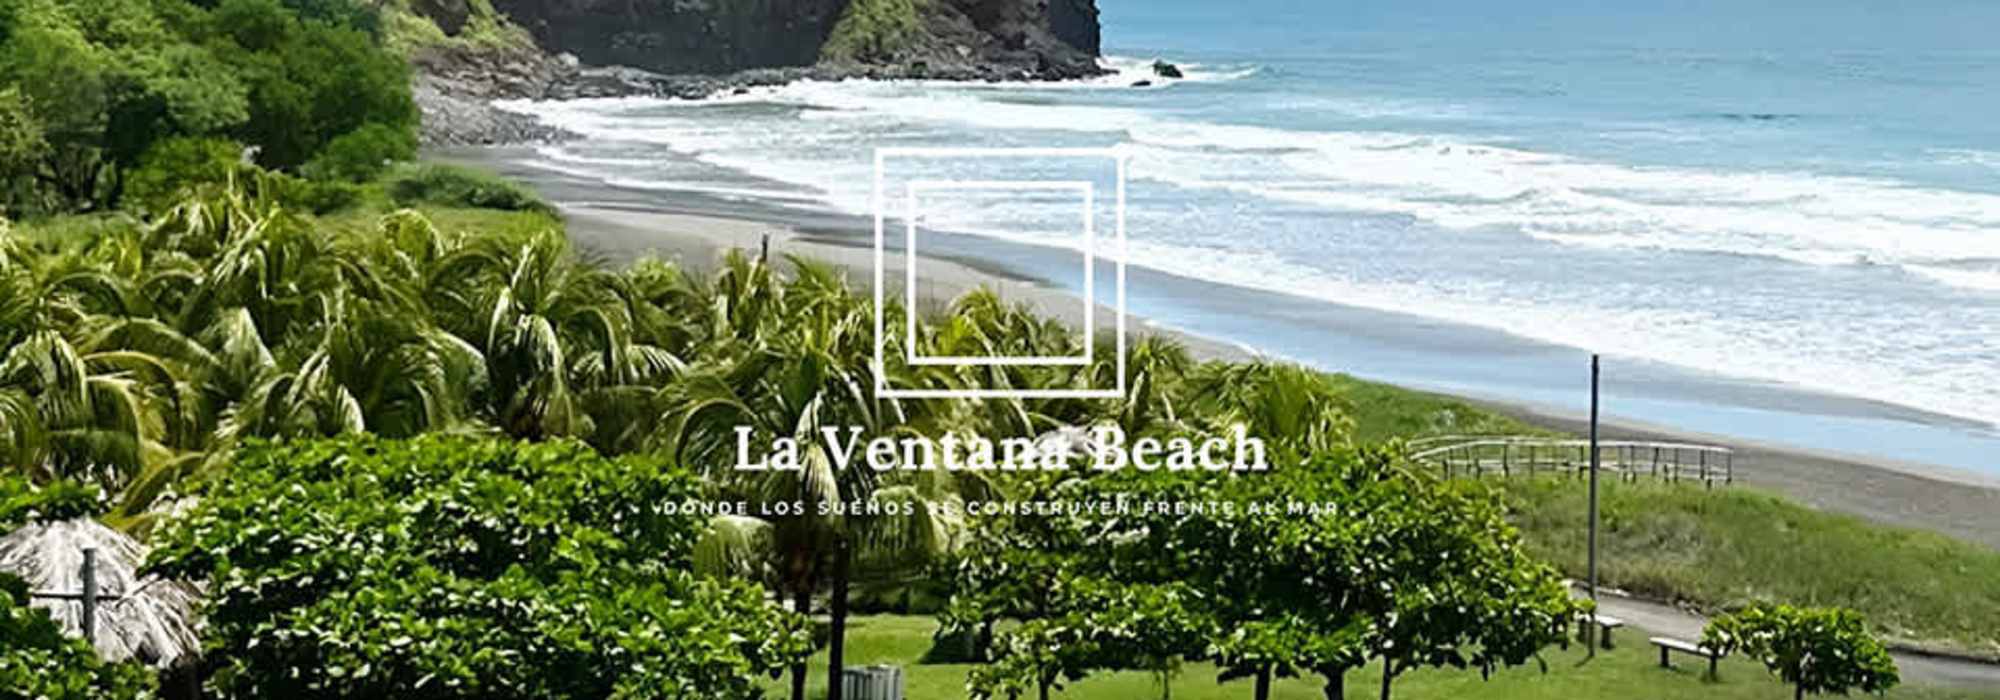 La Ventana Beach Surf City 2 - Land Sales